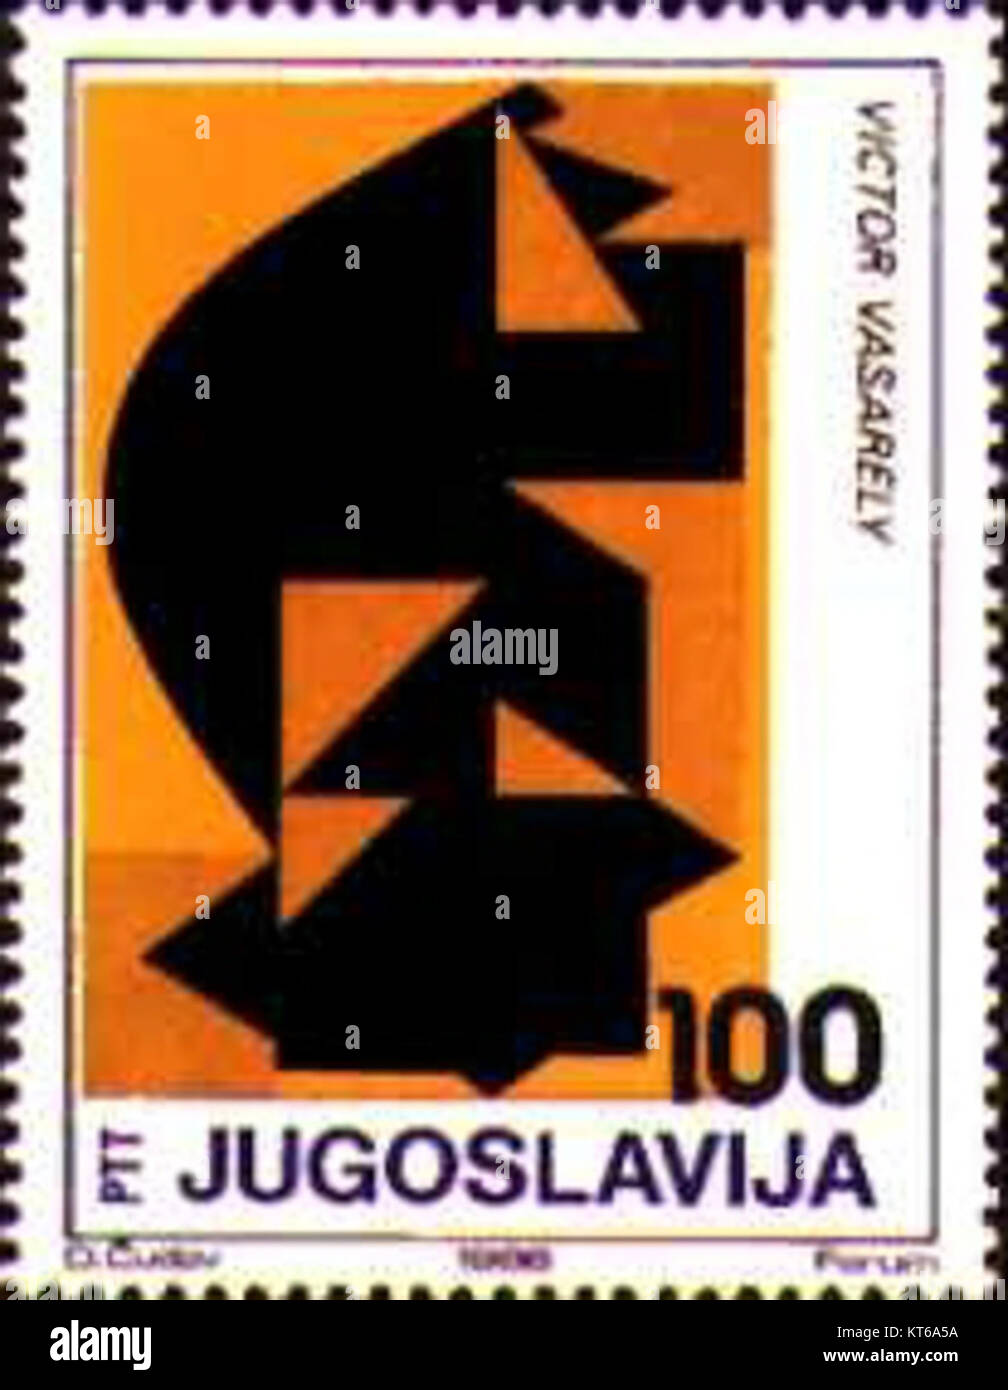 Victor Vasarely 1986 Yugoslavia stamp Stock Photo